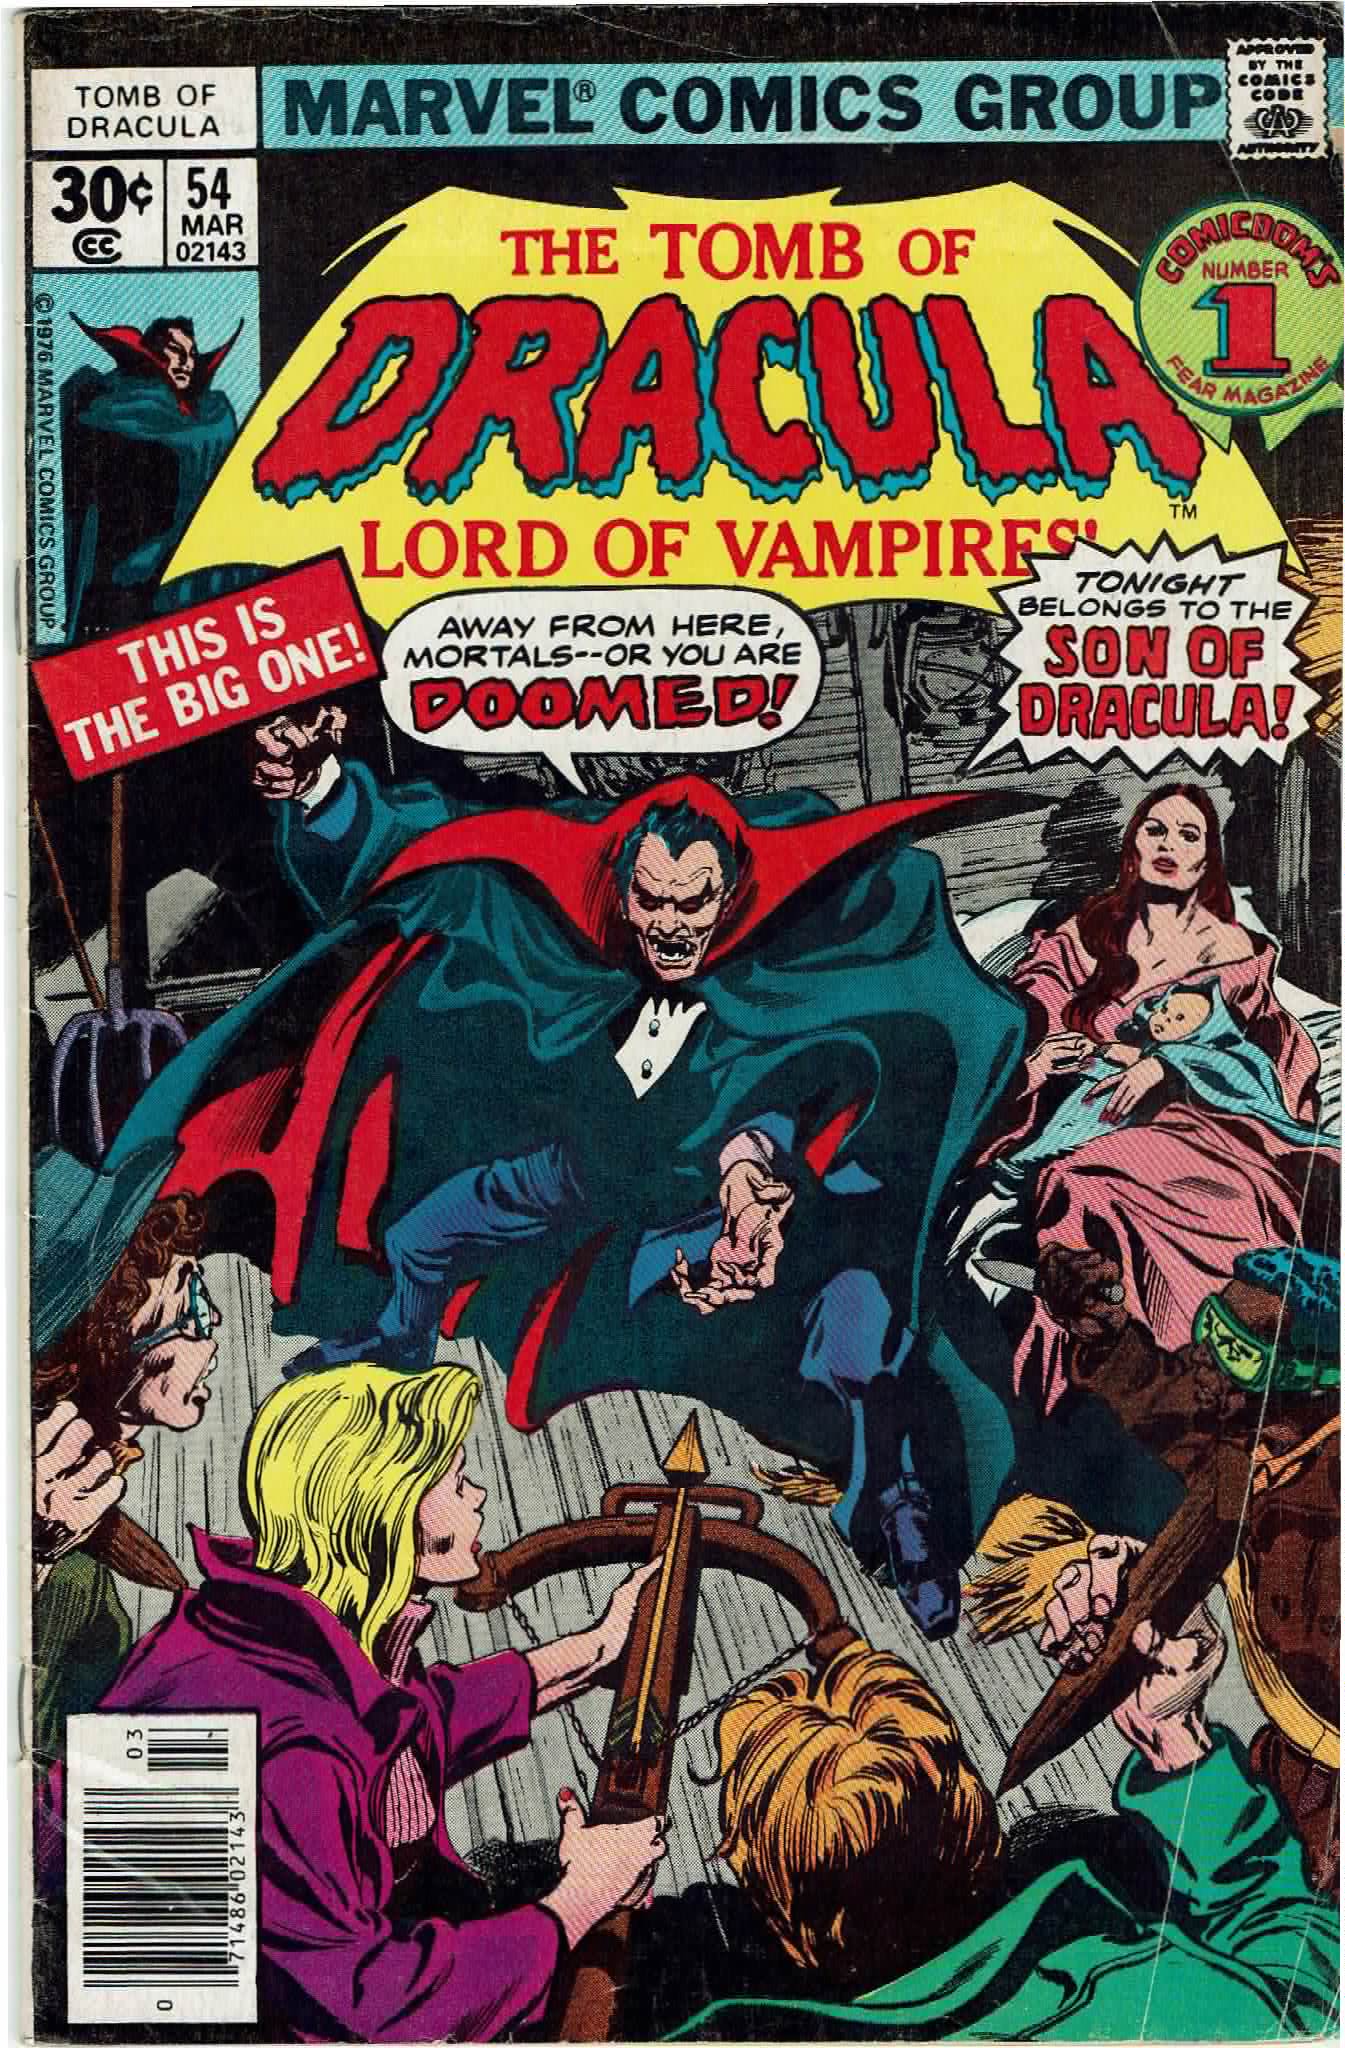 The Tomb of Dracula - Wikipedia